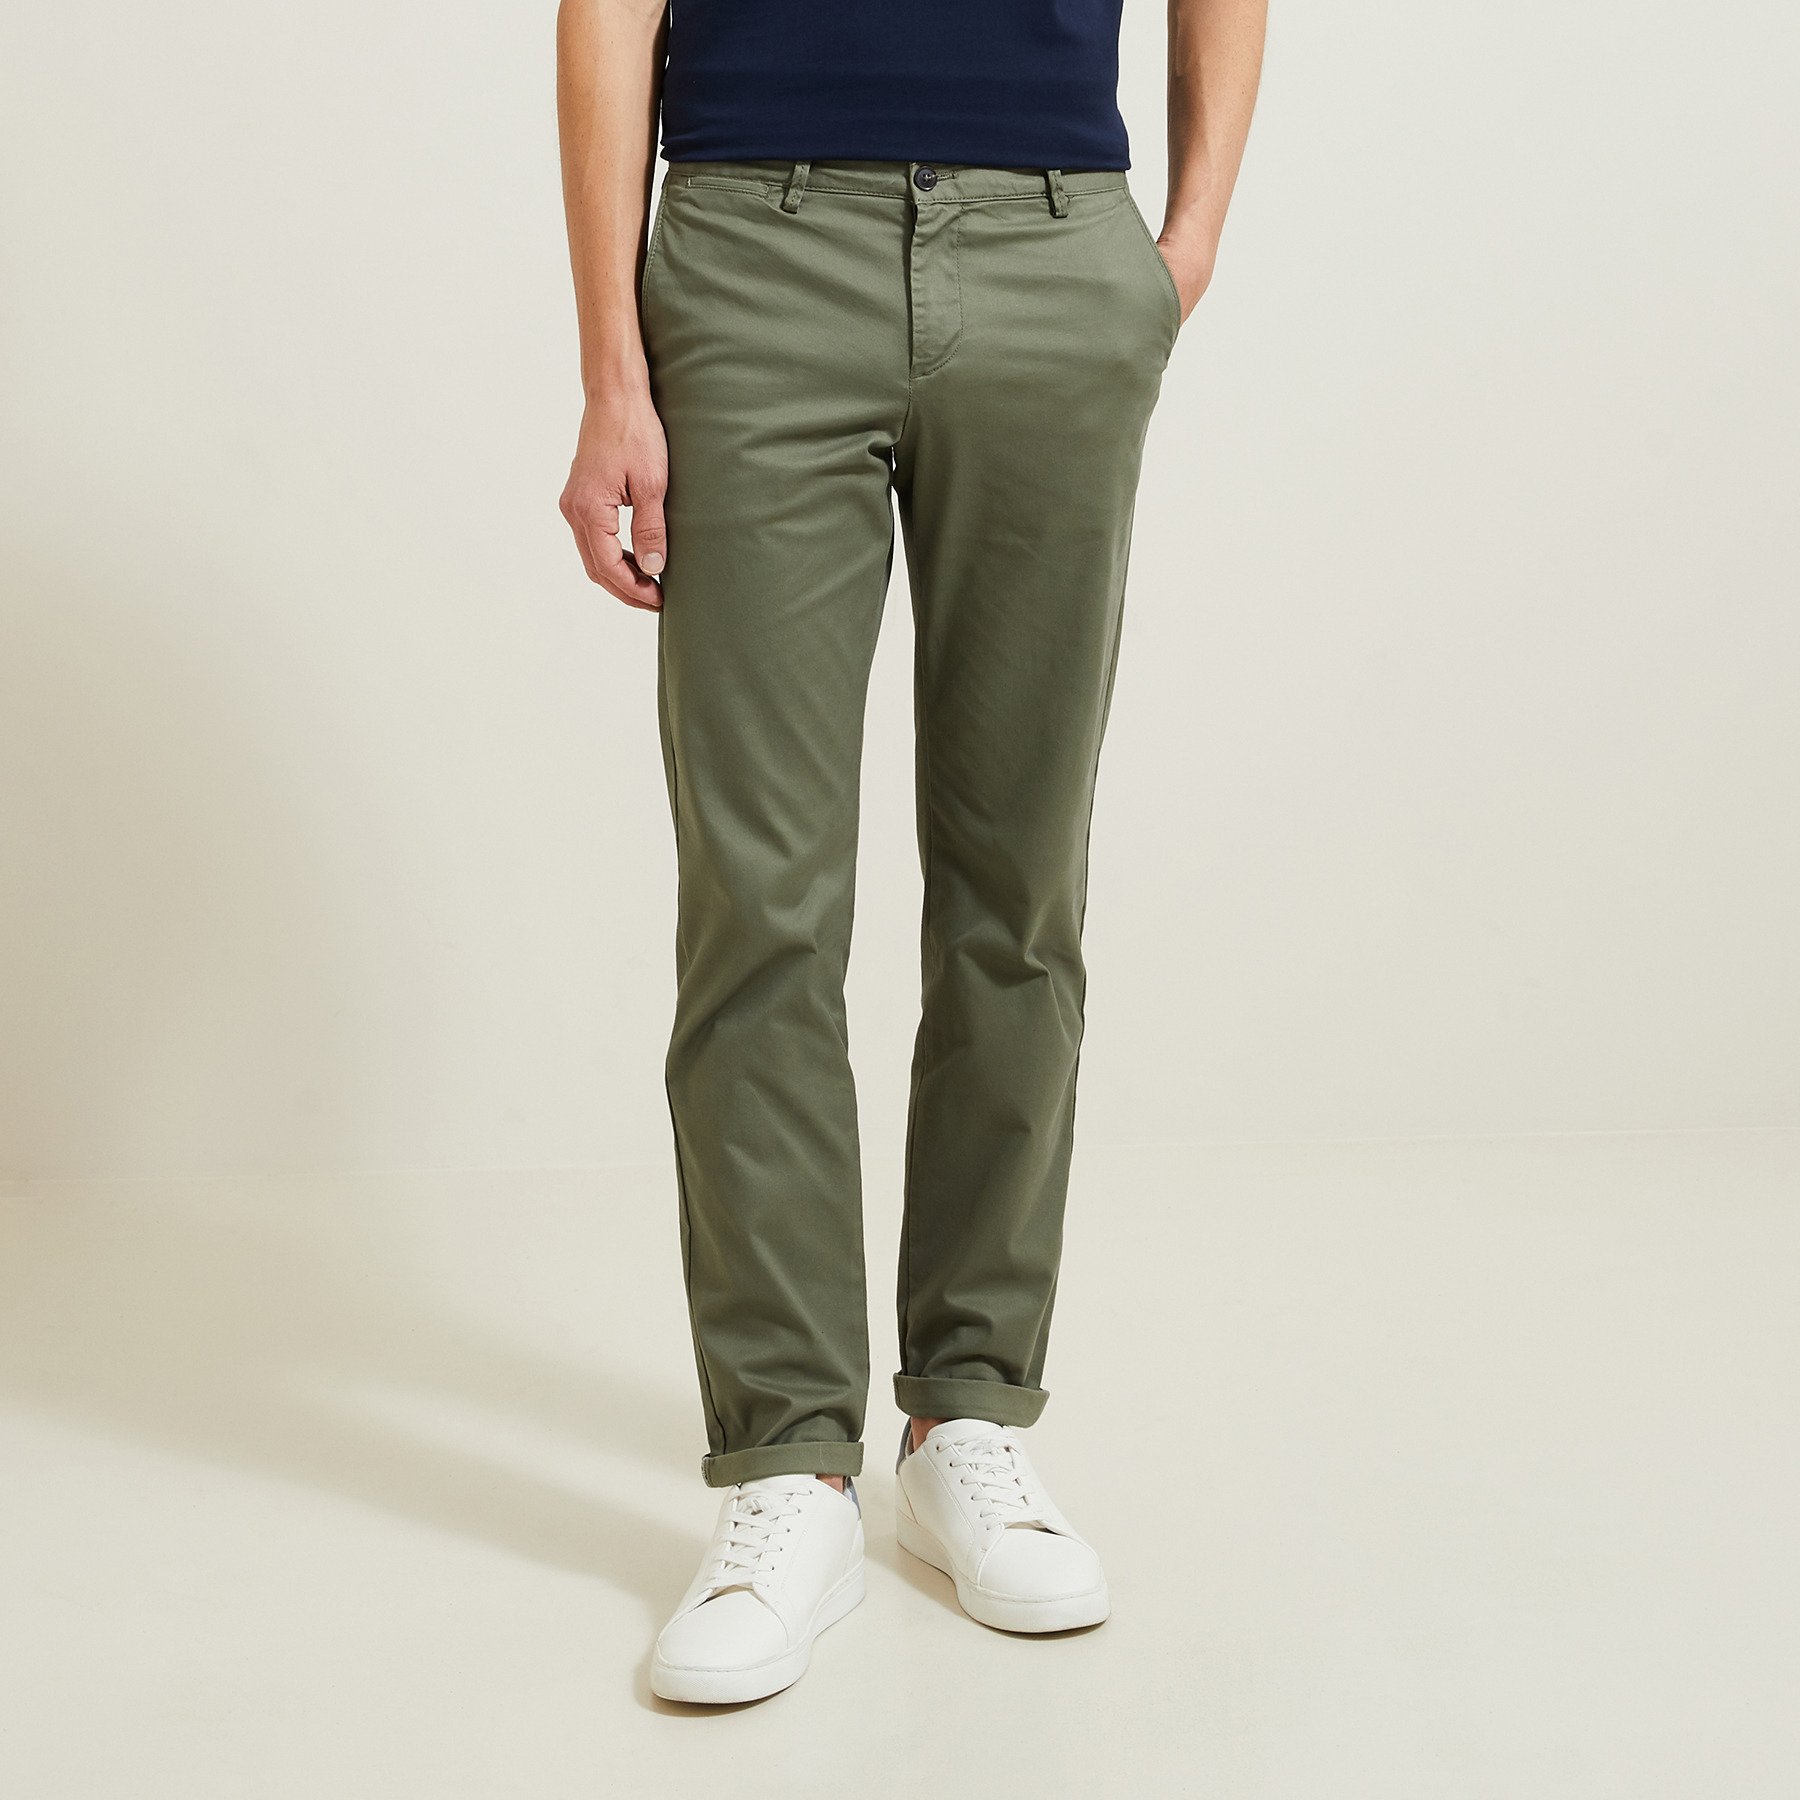 Pantalon chino regular "le parfait by JULES" Vert/Kaki 38 98% Coton, 2% Elasthanne Homme